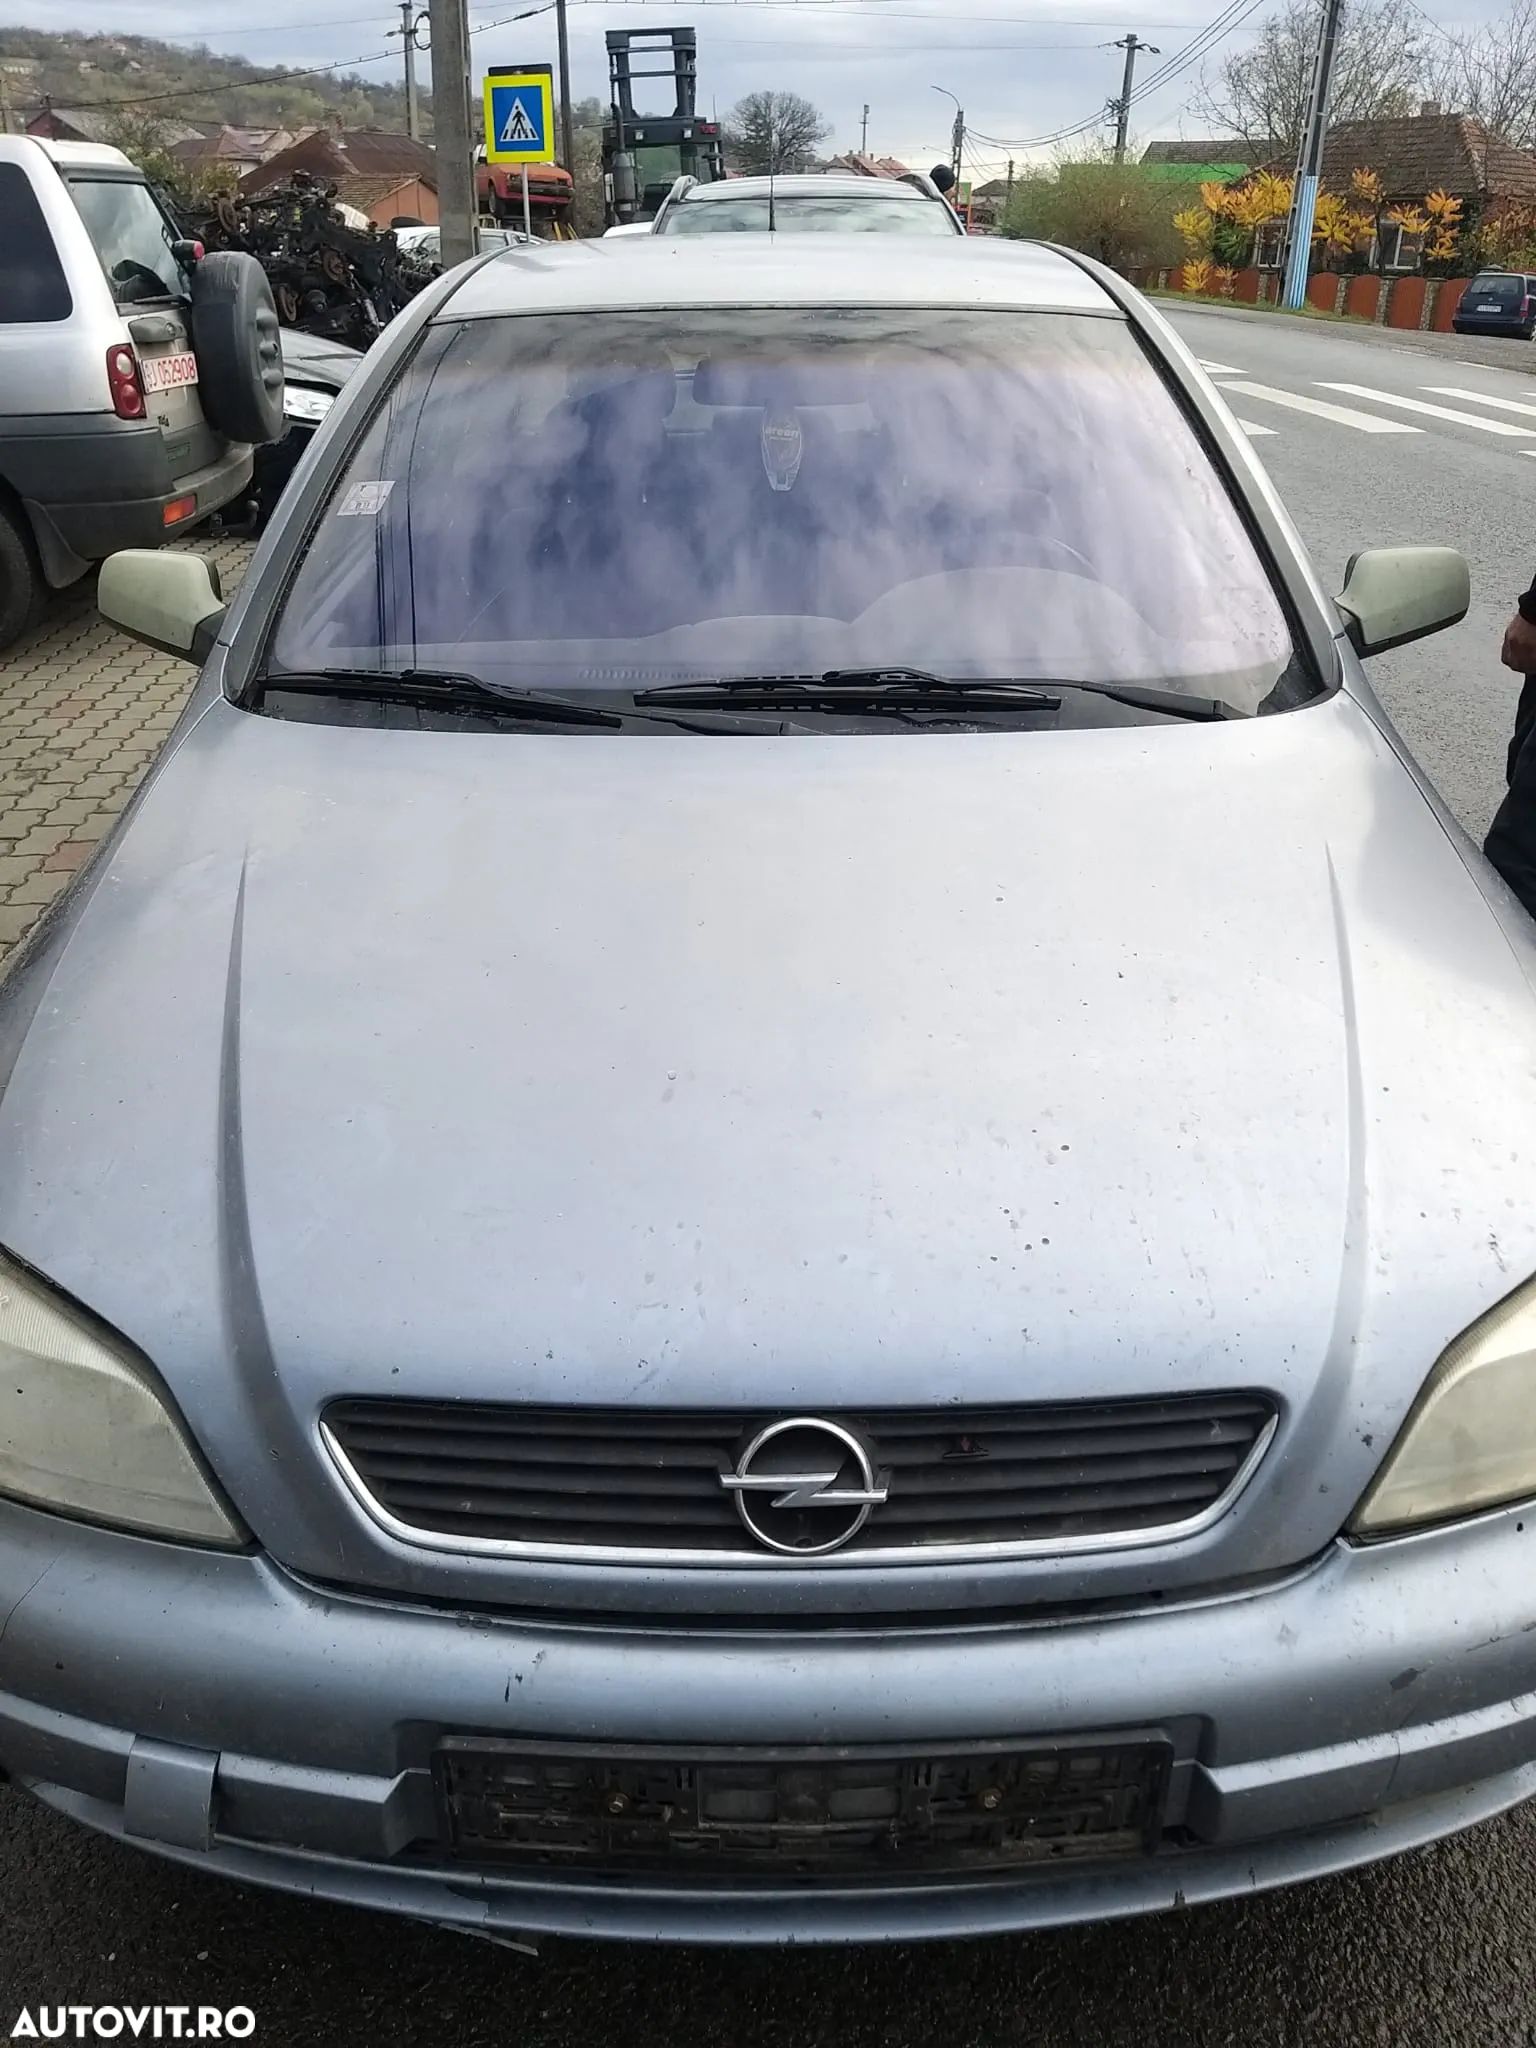 Dezmembram Opel Astra G din 2004, 1.7CDTI, cod Motor: Z17DTL, 80CP - 1